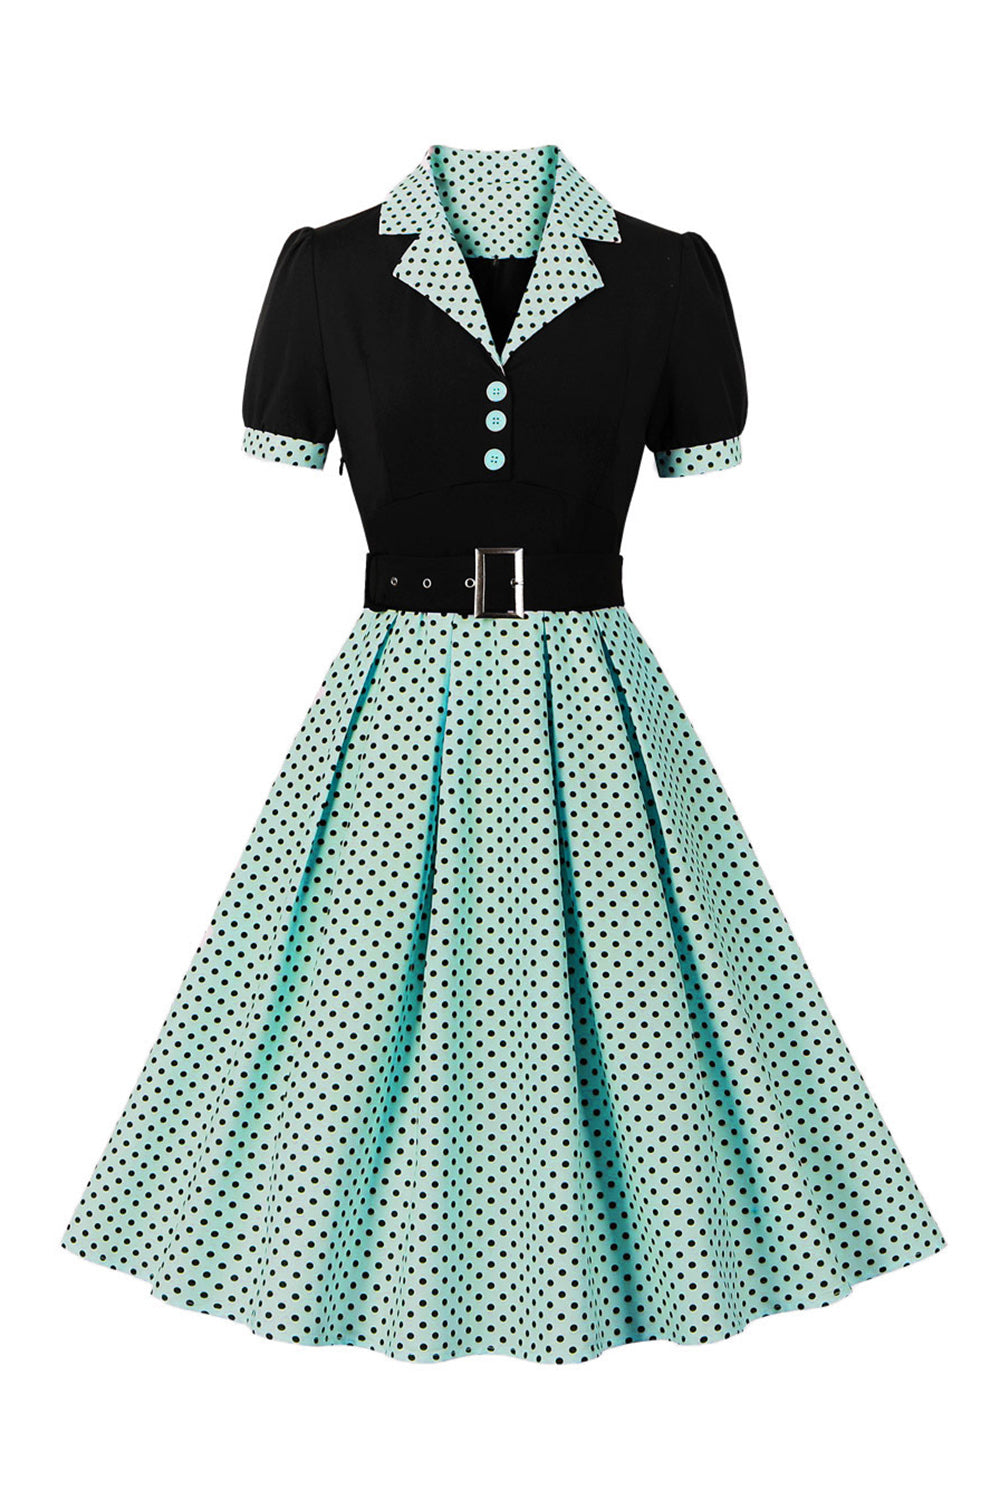 Green Short Sleeves Polka Dots 1950s Dress With Belt